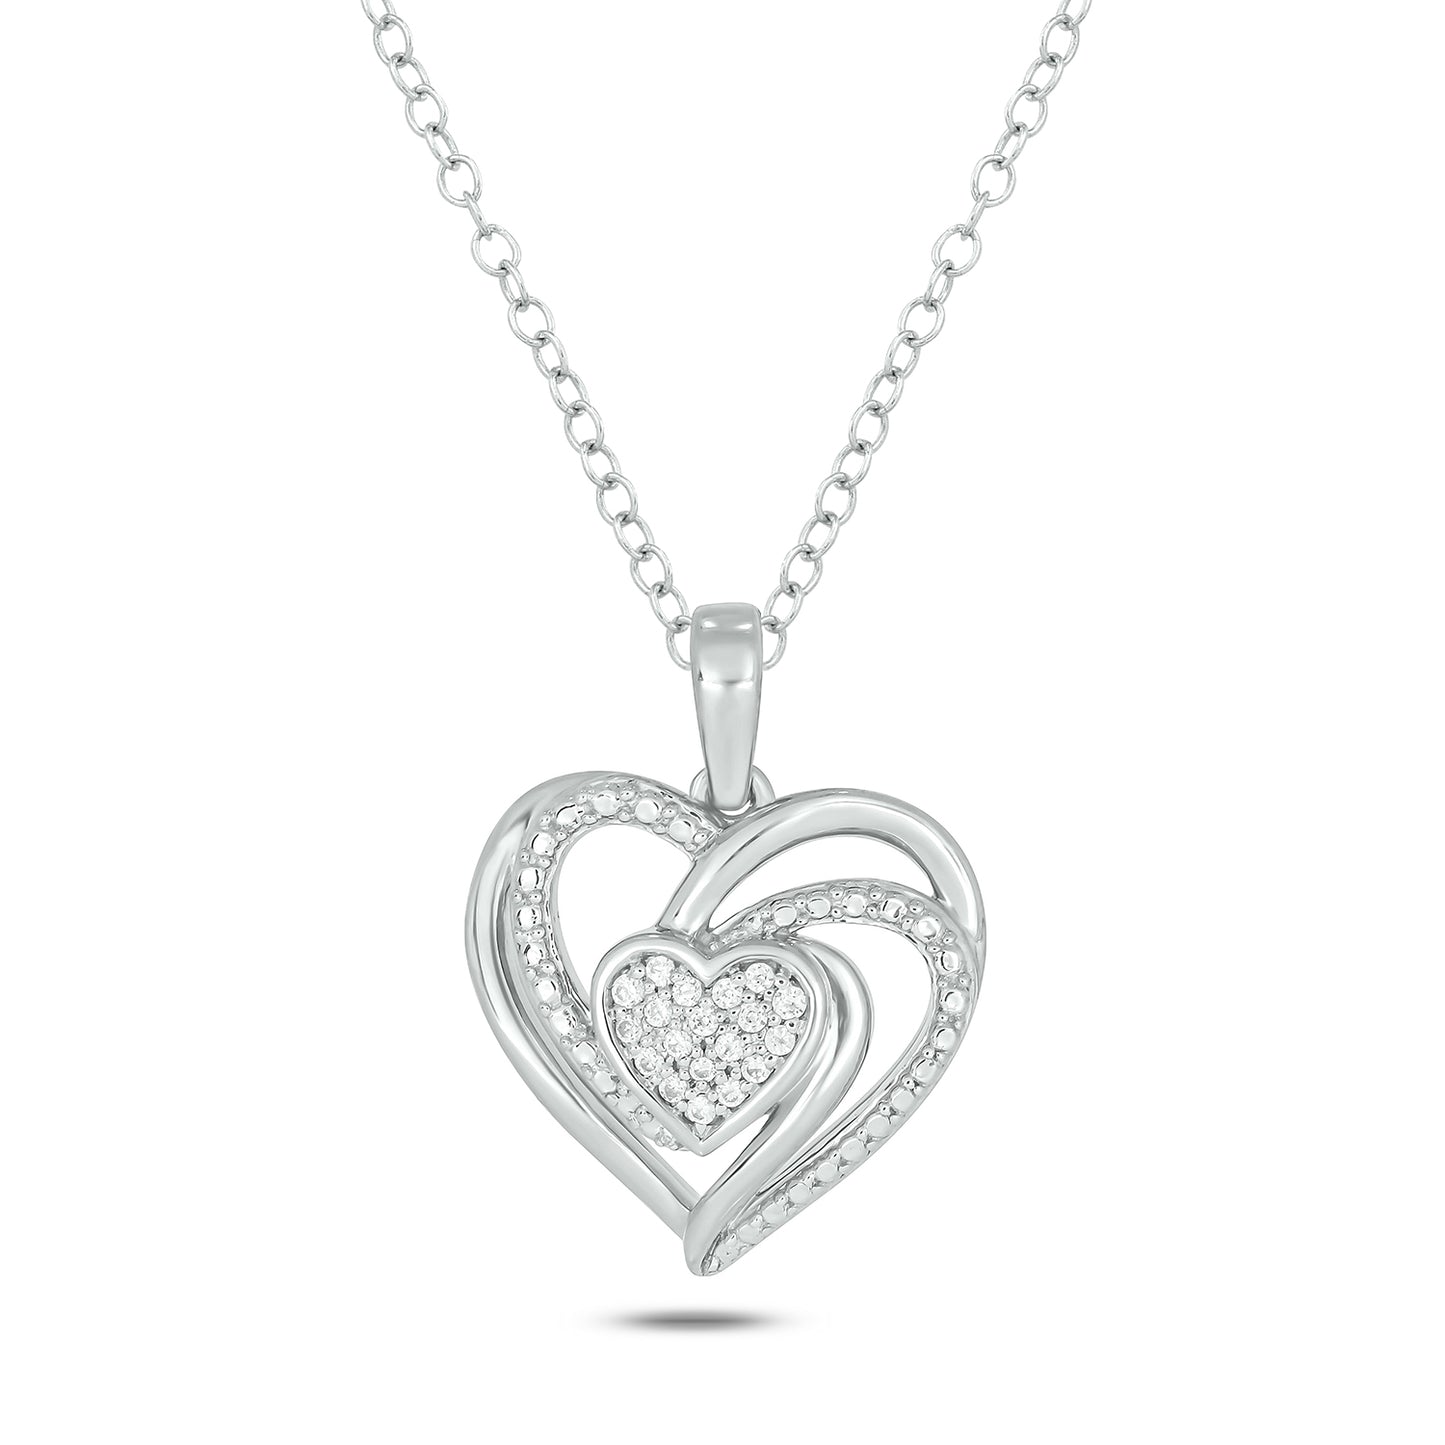 Elegant Diamond Heart Pendant Necklace in 925 Sterling Silver